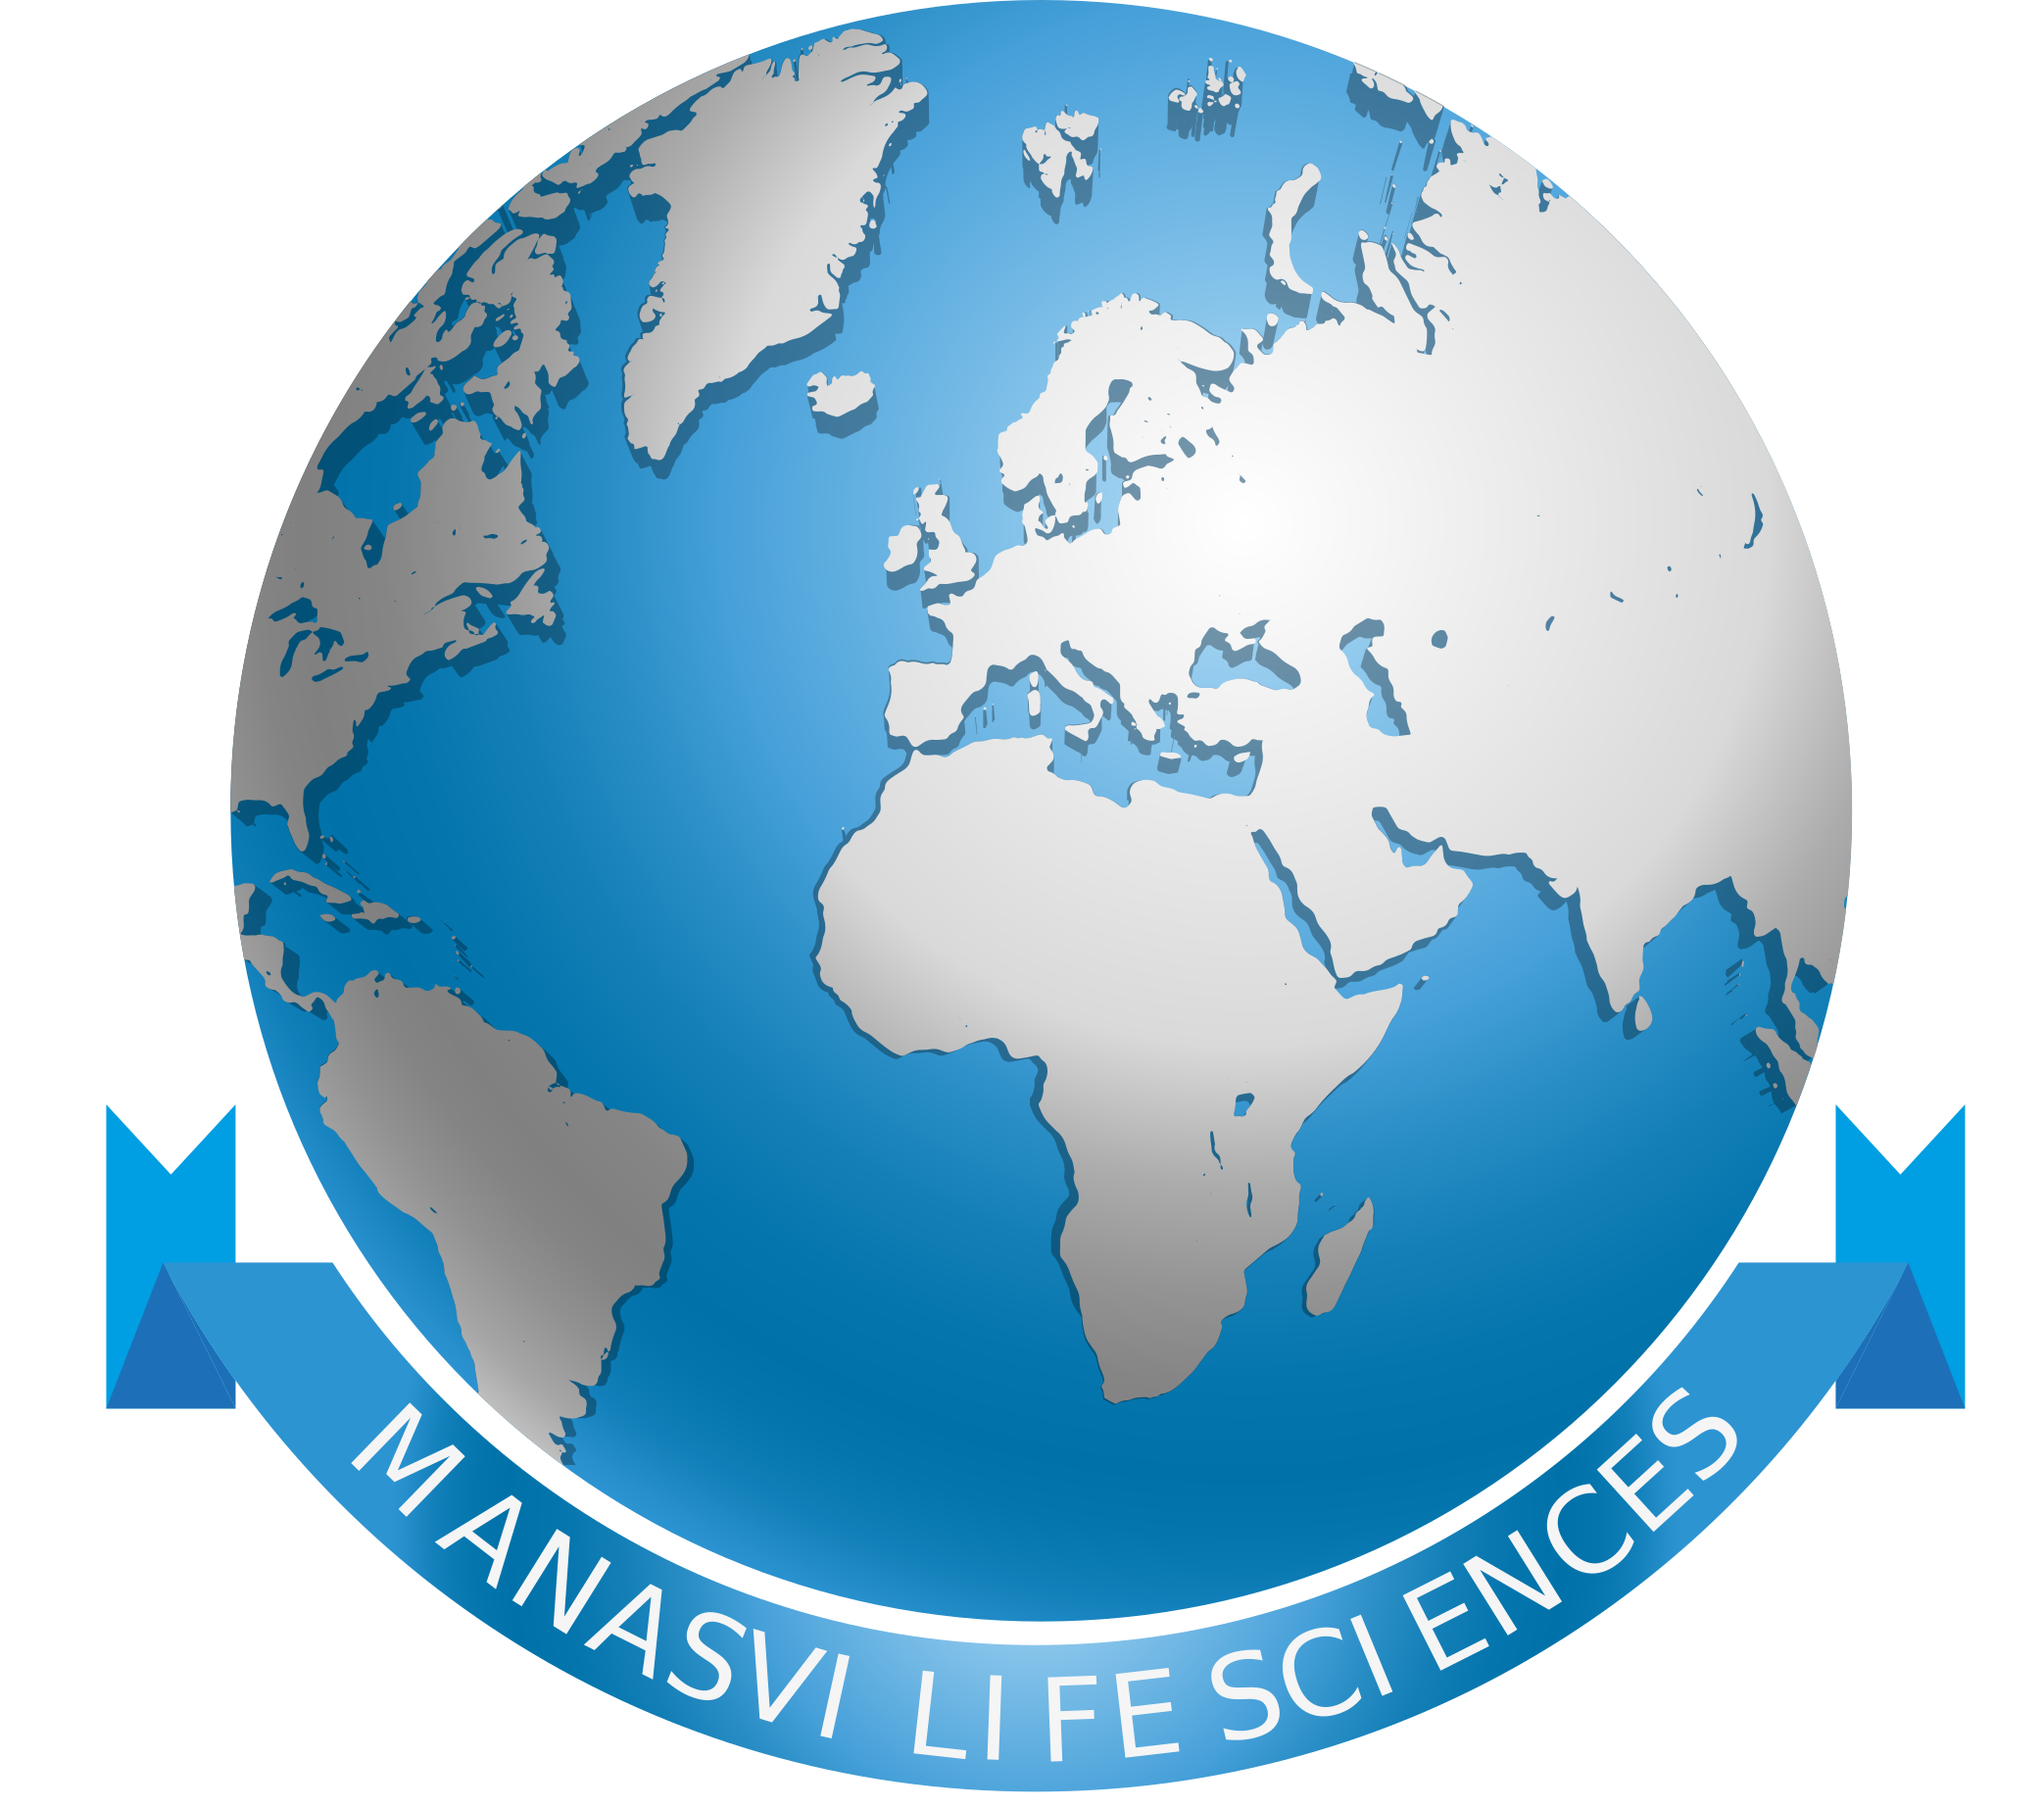 Manasvi Life Sciences